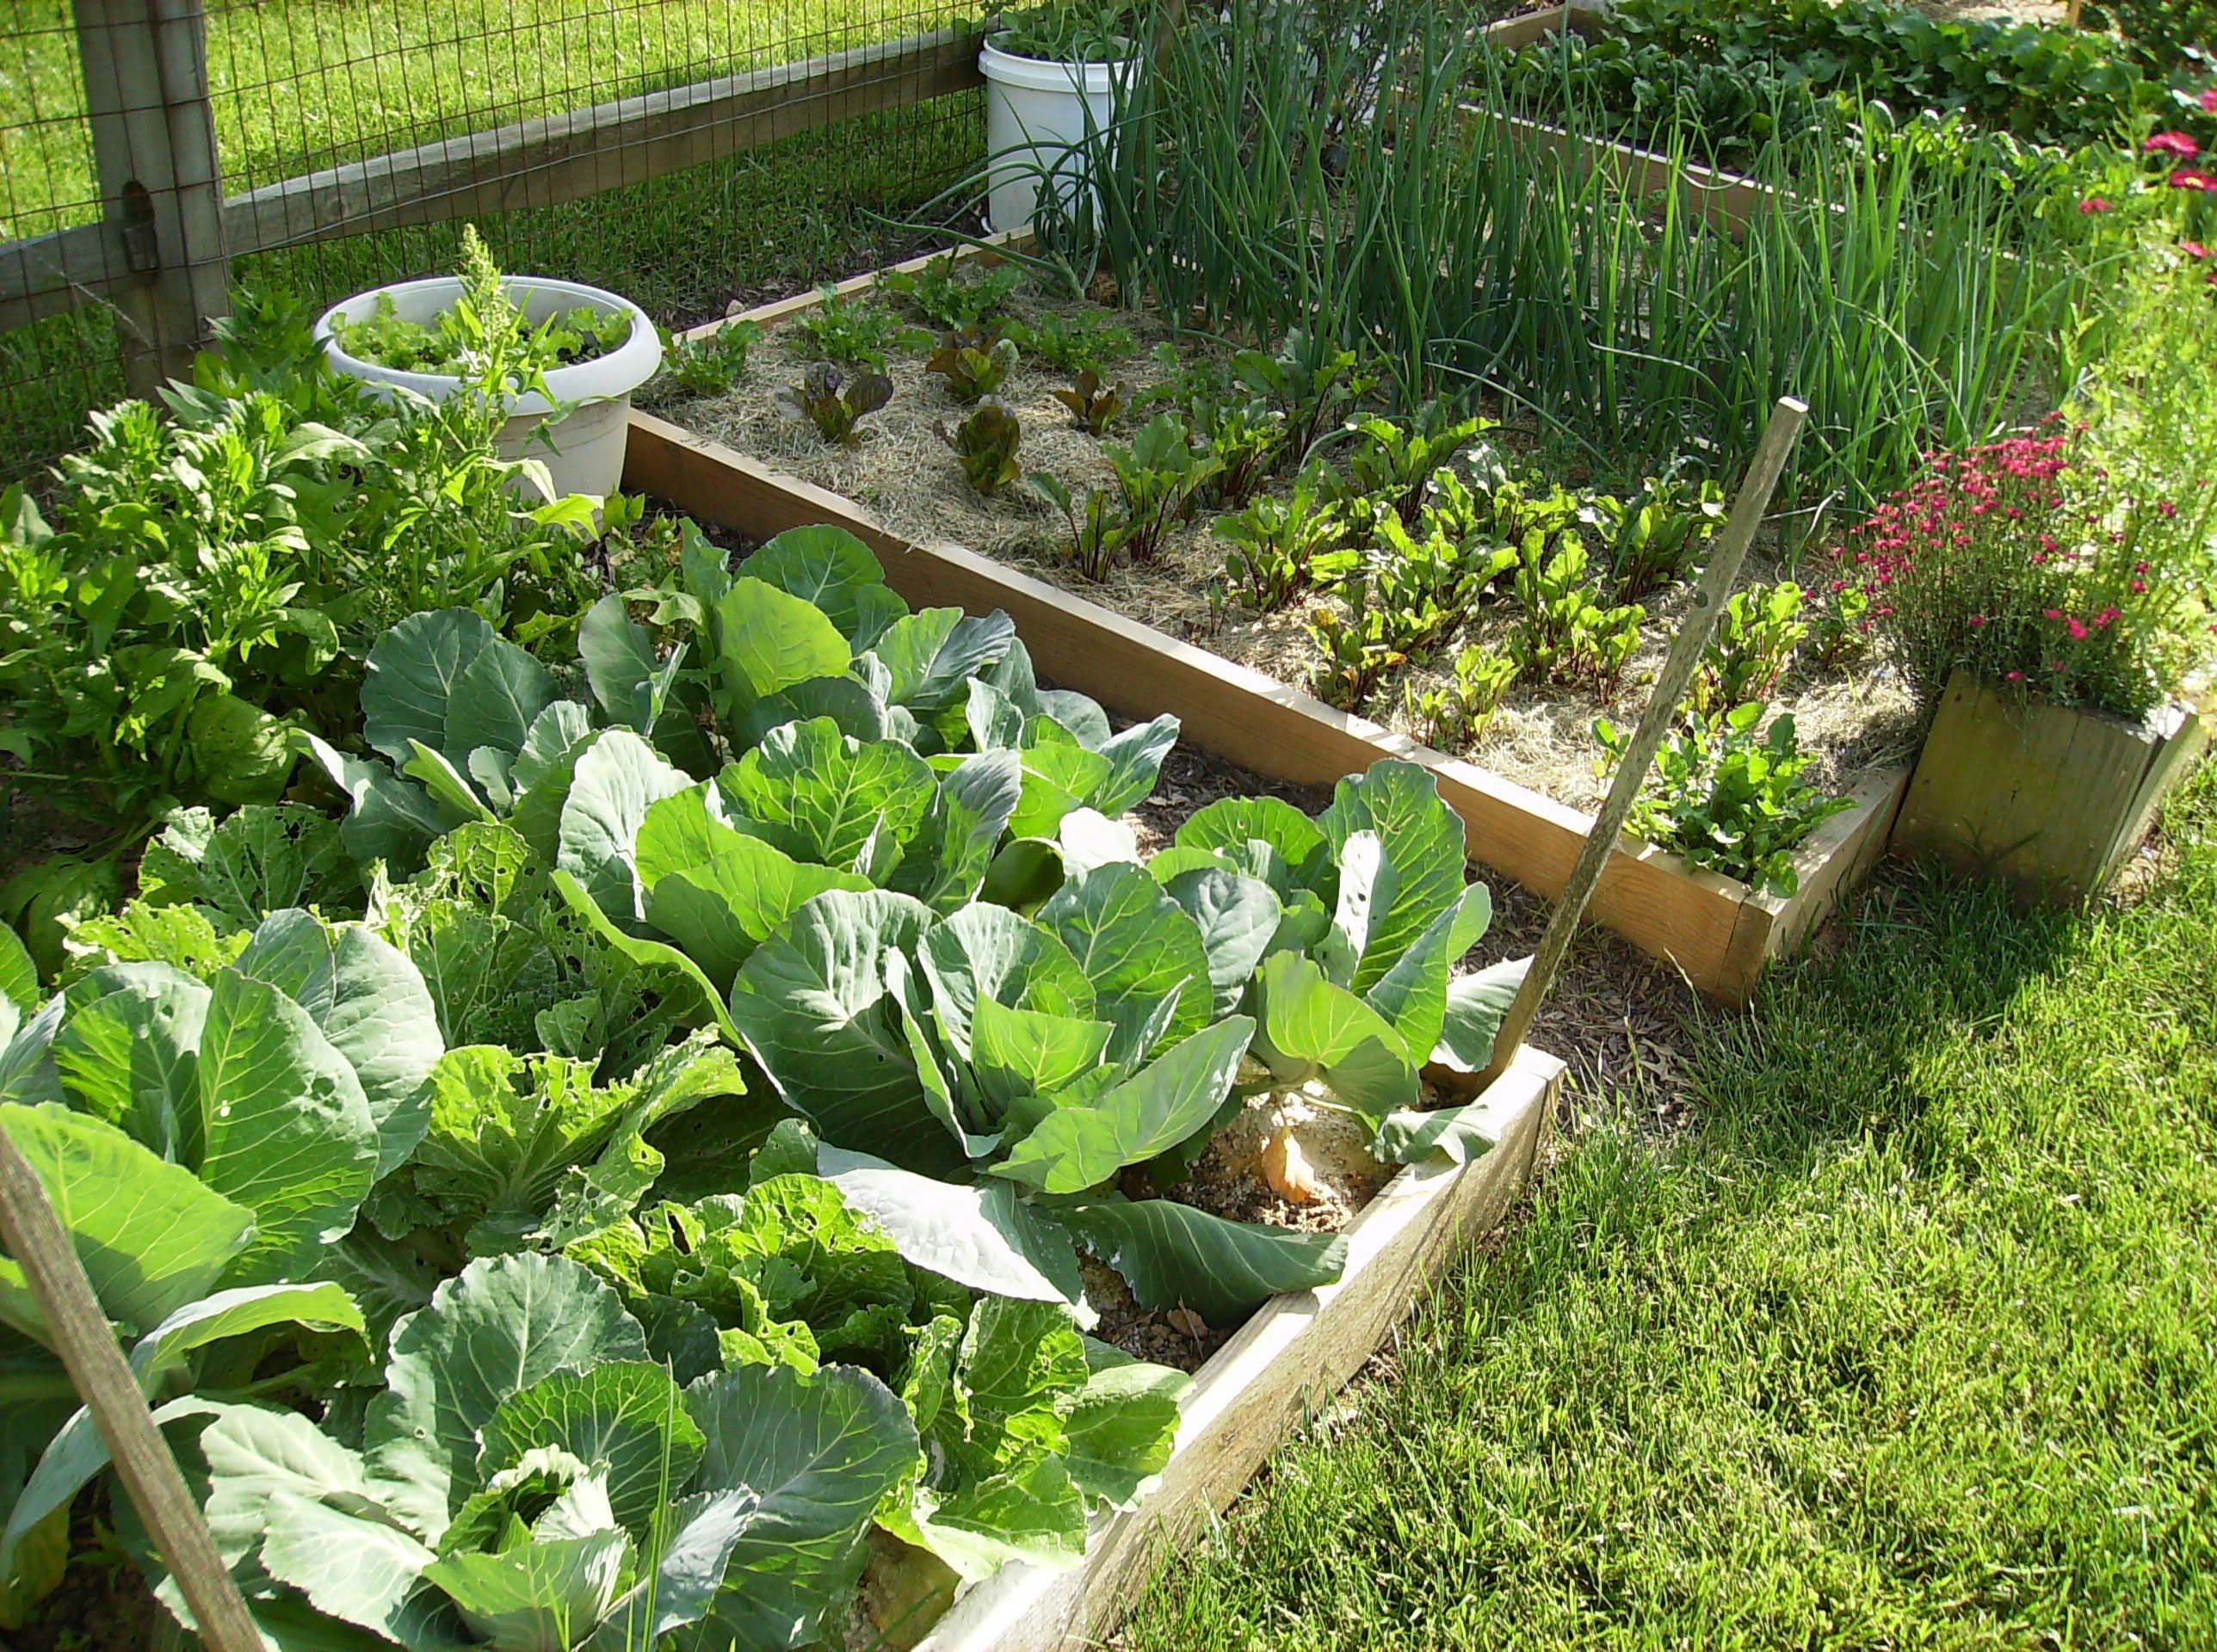 Watering Vegetable Garden - Elegant Watering Ve Able Gardening In A ...